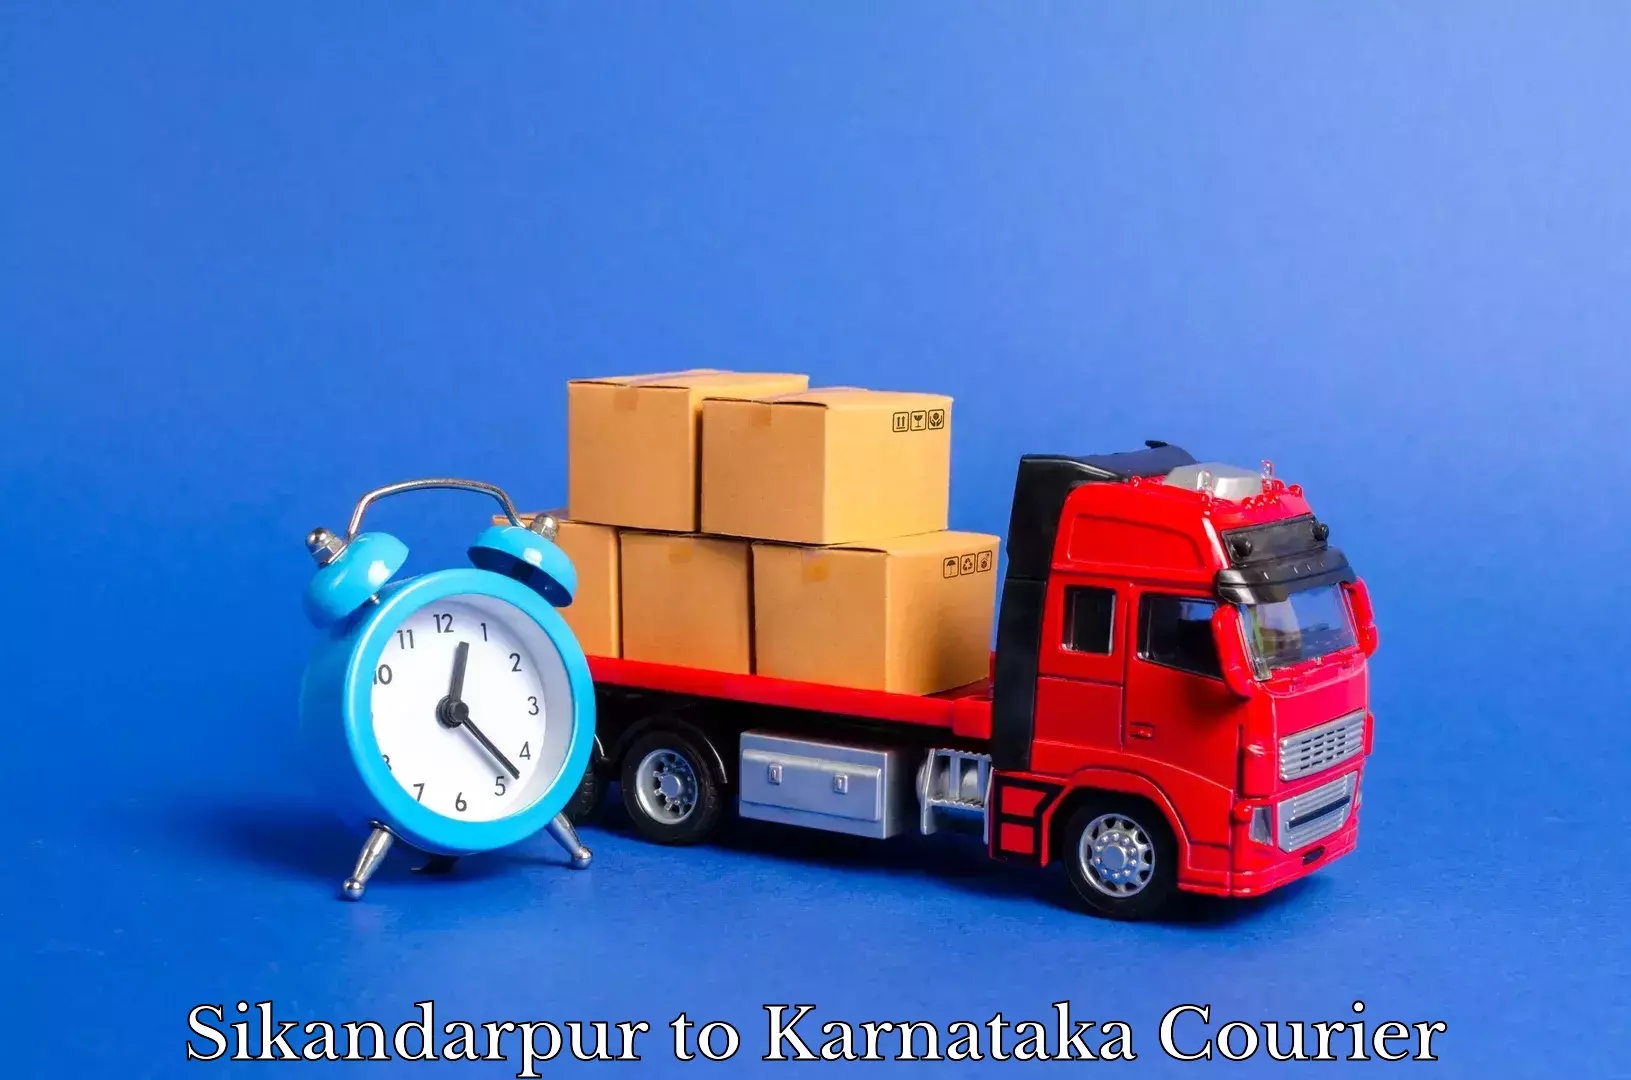 Professional moving company Sikandarpur to Hosadurga